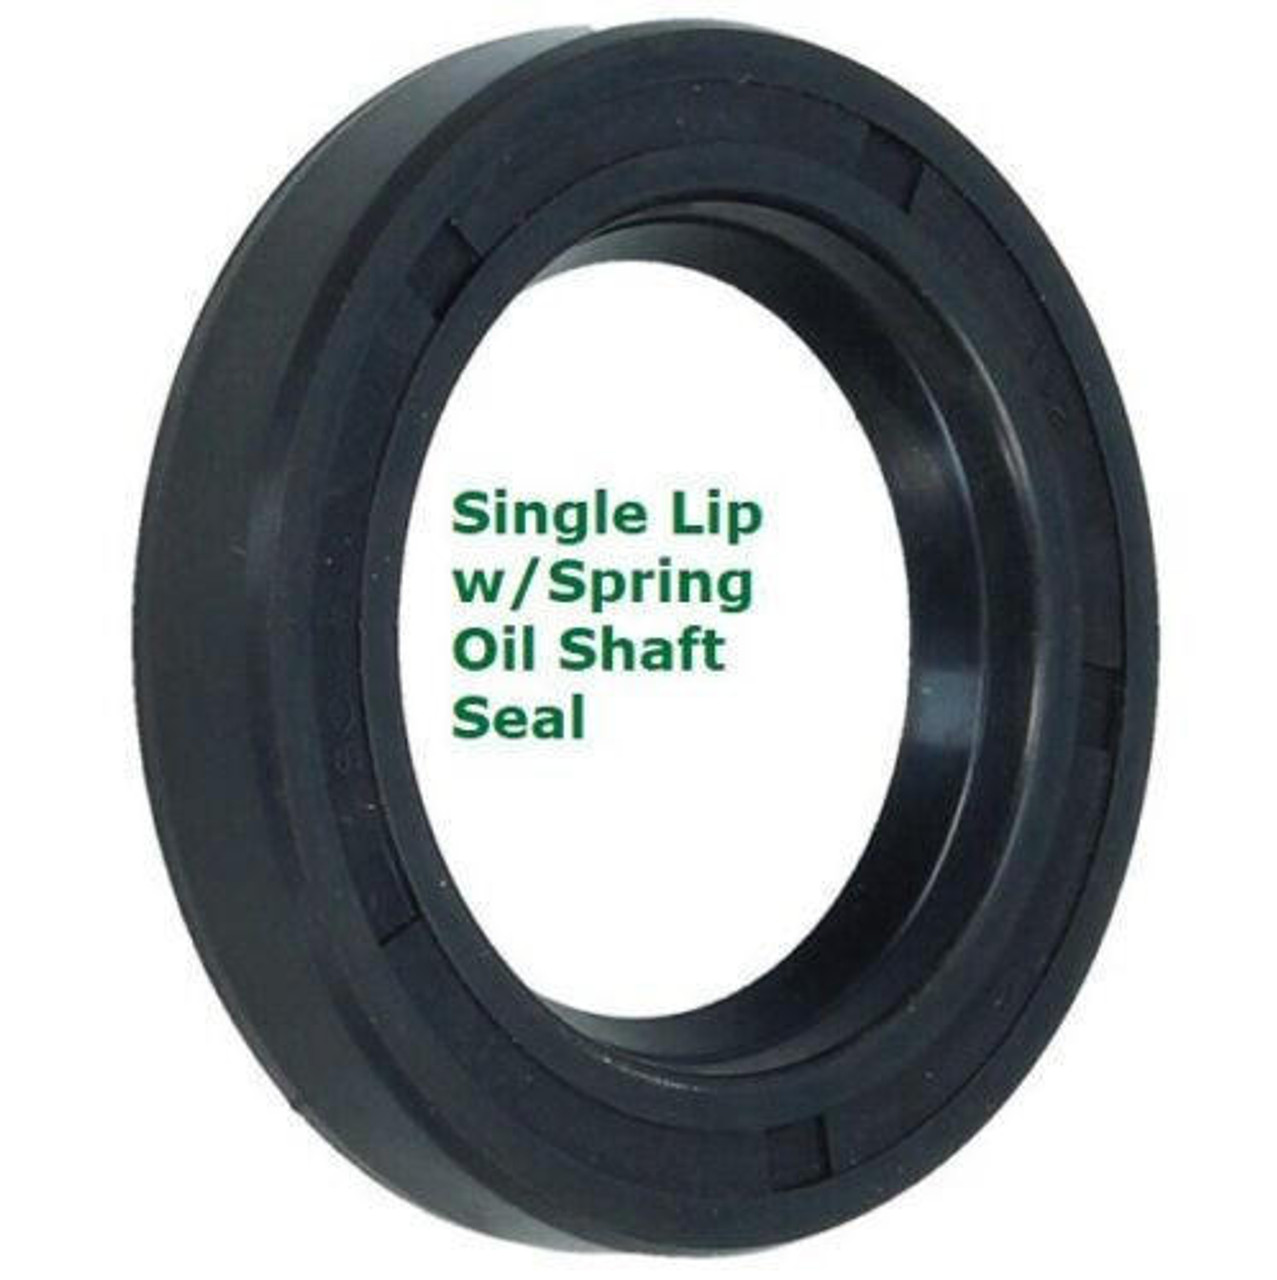 Metric Oil Shaft Seal 75 x 115 x 12mm Single Lip   Price for 1 pc